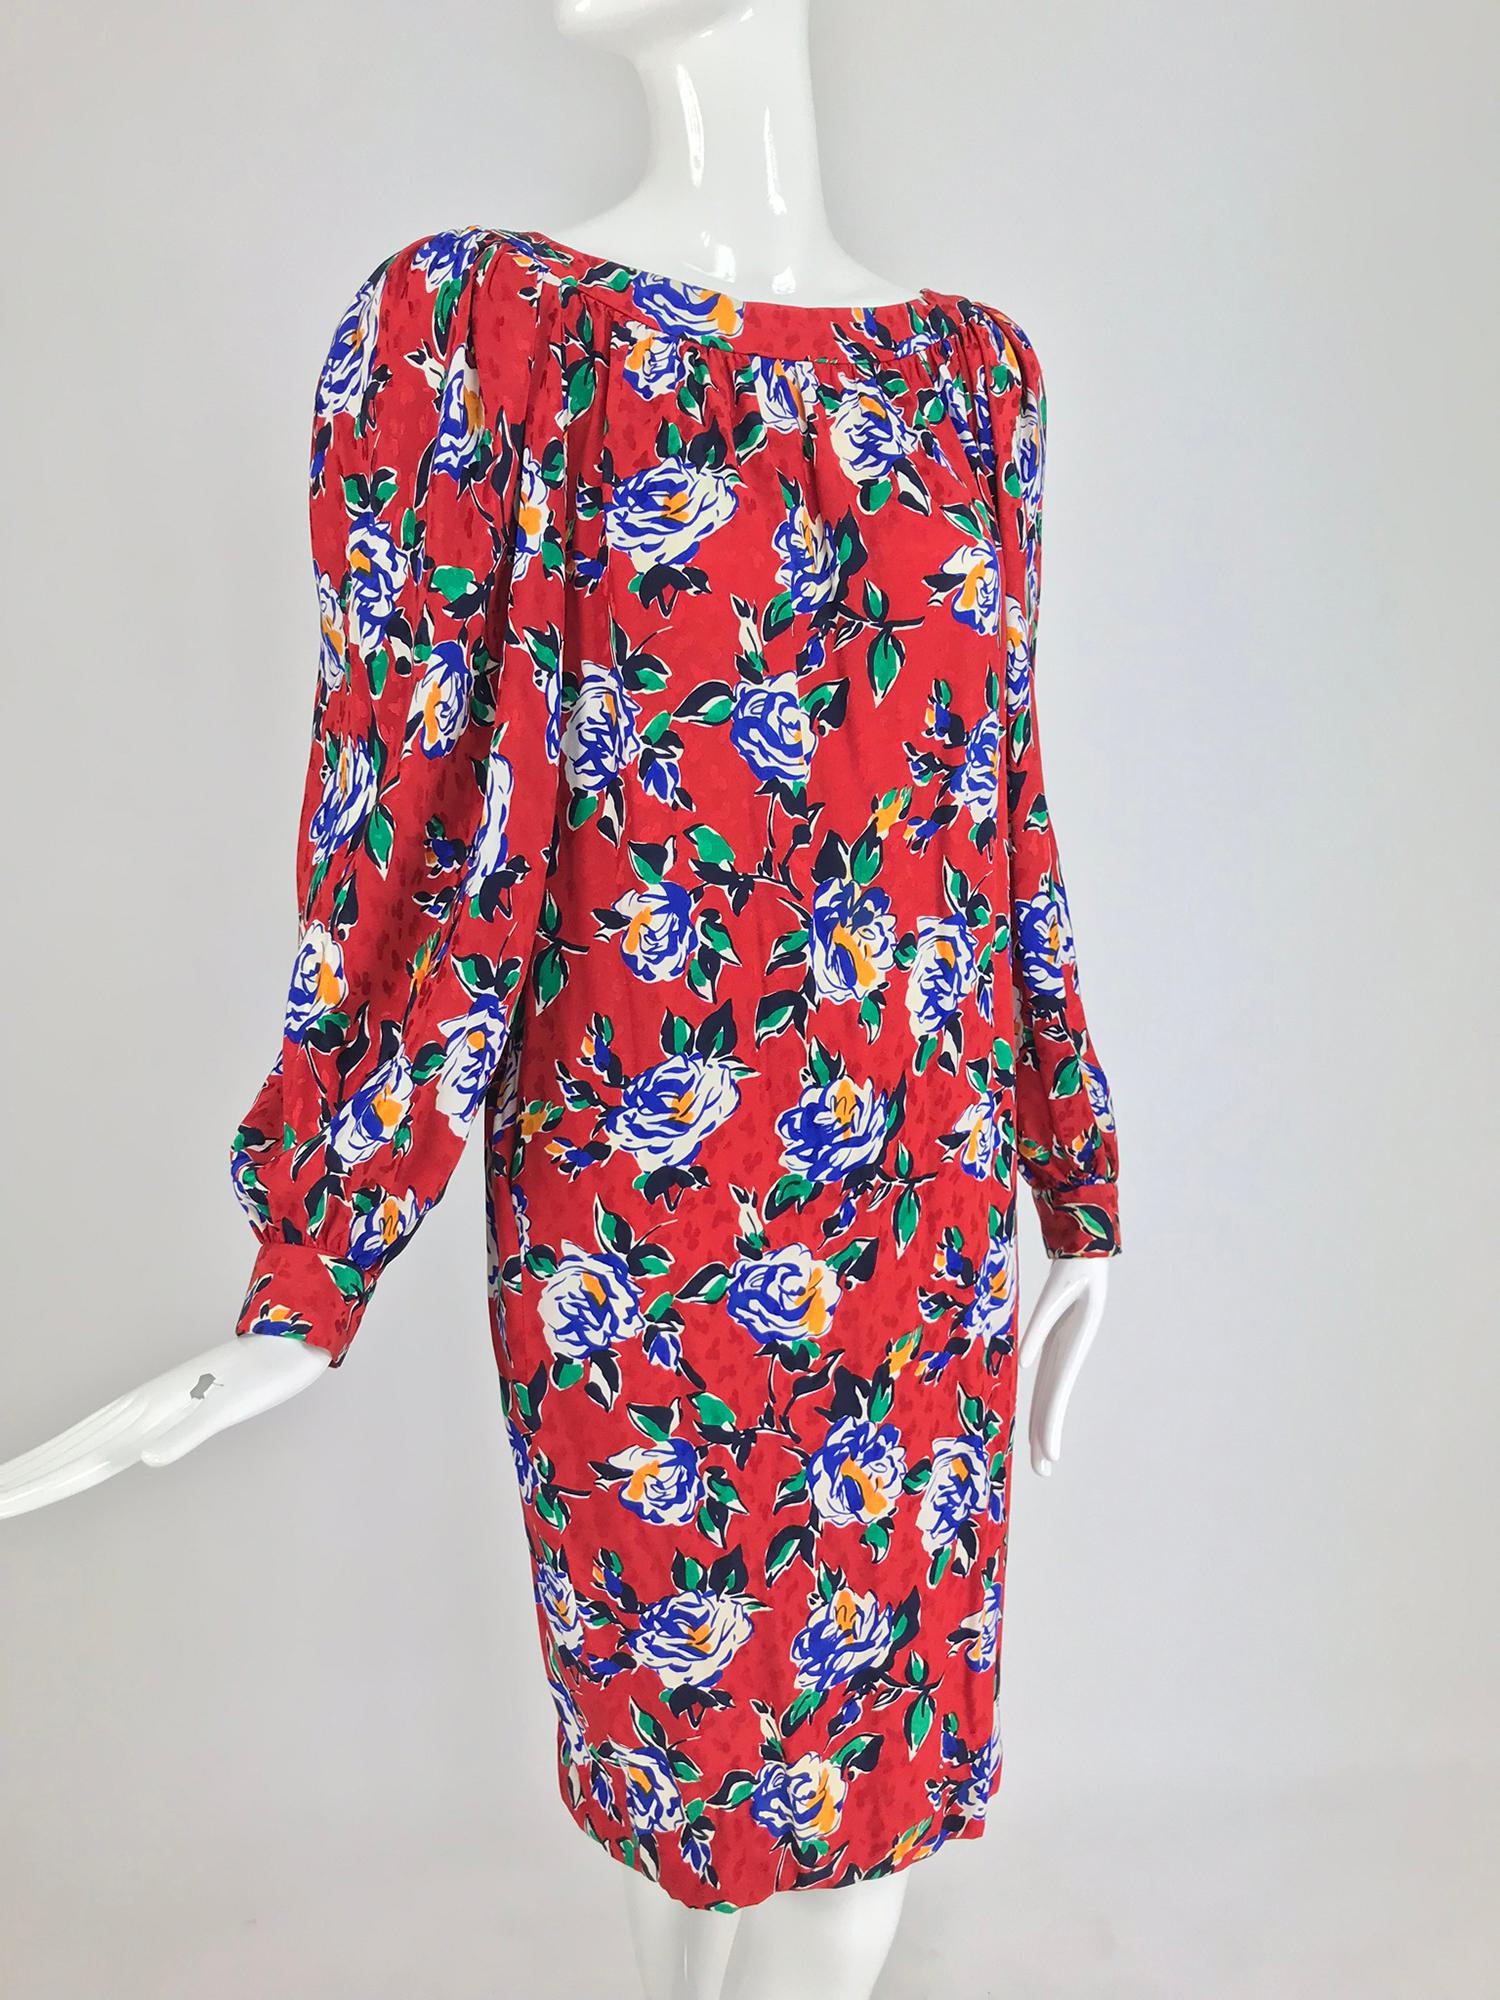 Yves Saint Laurent Red Floral Silk Jacquard Scoop Neck Dress 1990s 7